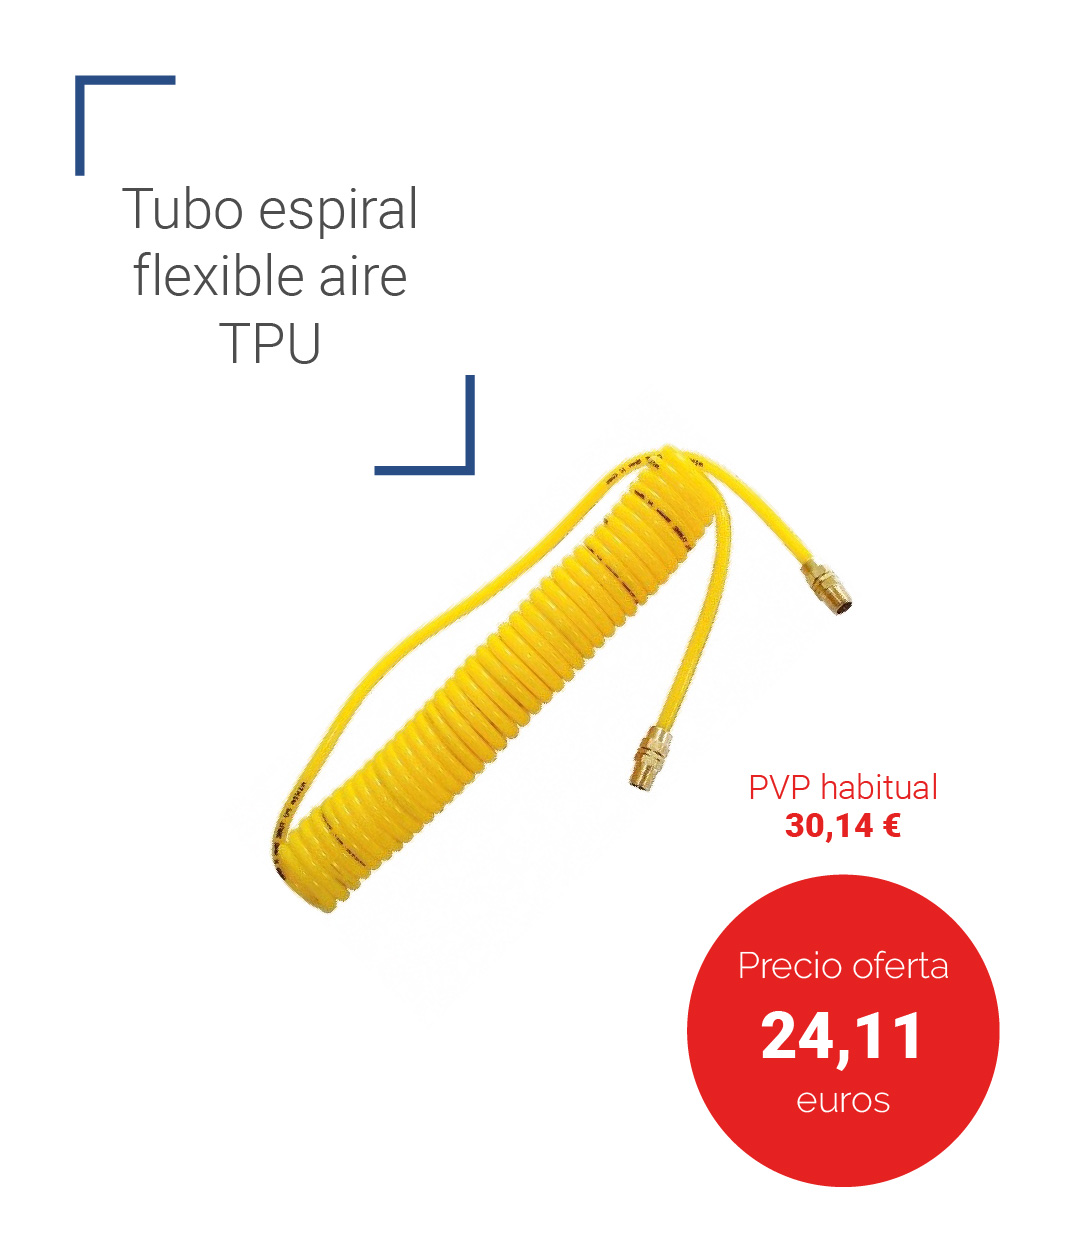 Oferta tubo espiral flexible aire TPU